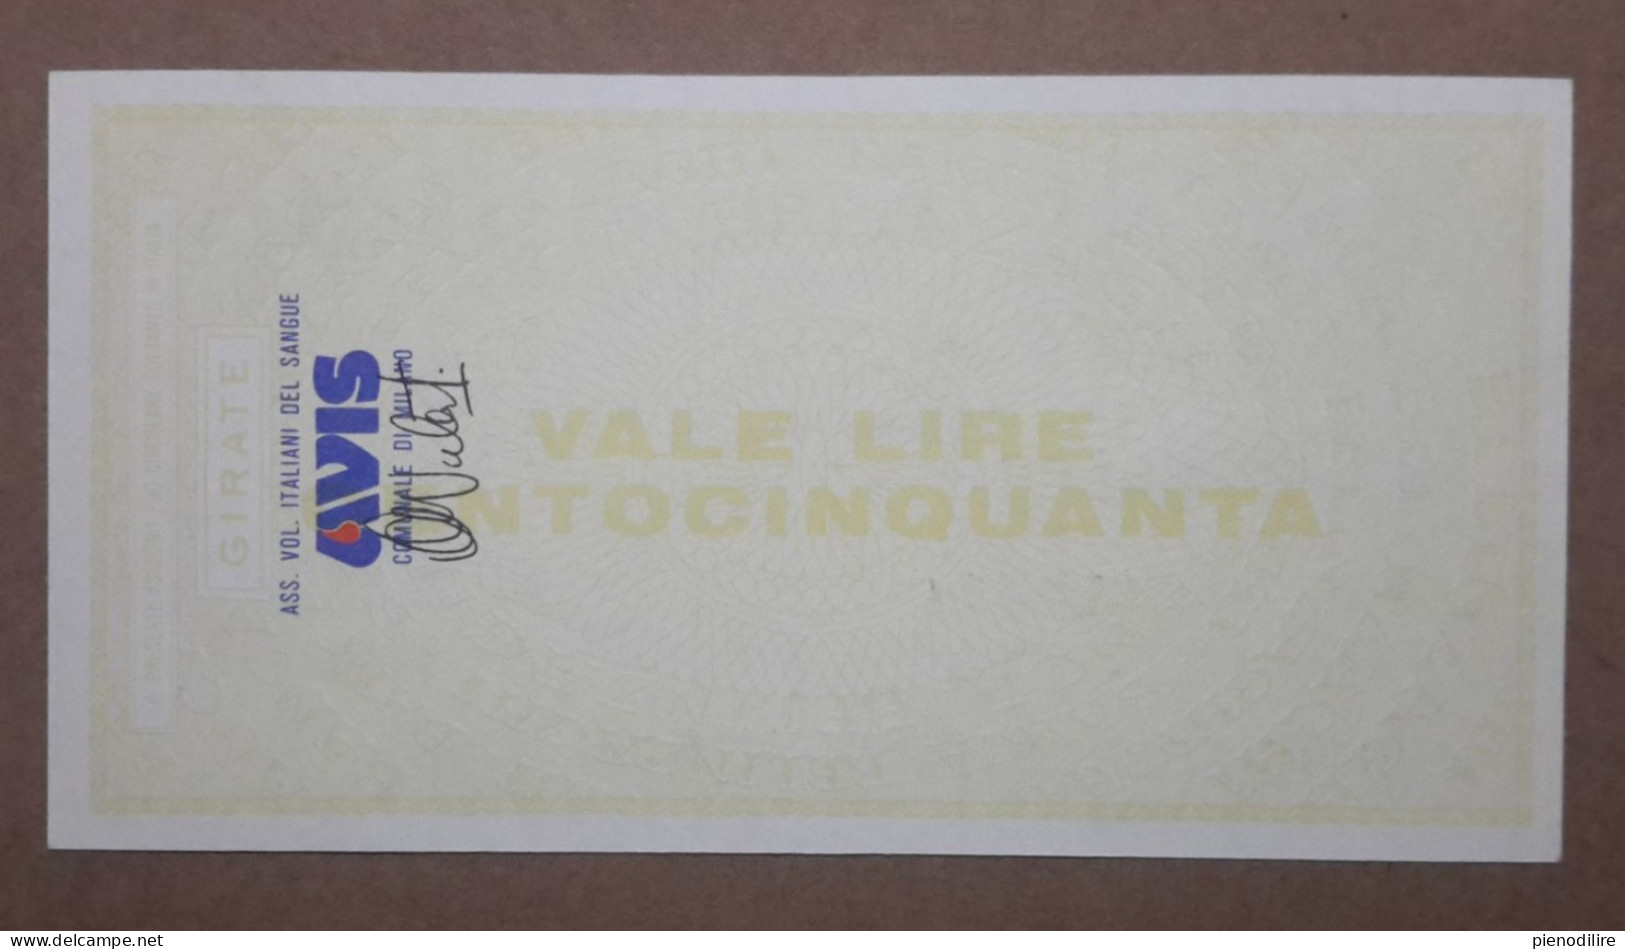 BANCA BELINZAGHI, 150 LIRE 30.06.1977 A.V.I.S. MILANO (A1.92) - [10] Checks And Mini-checks